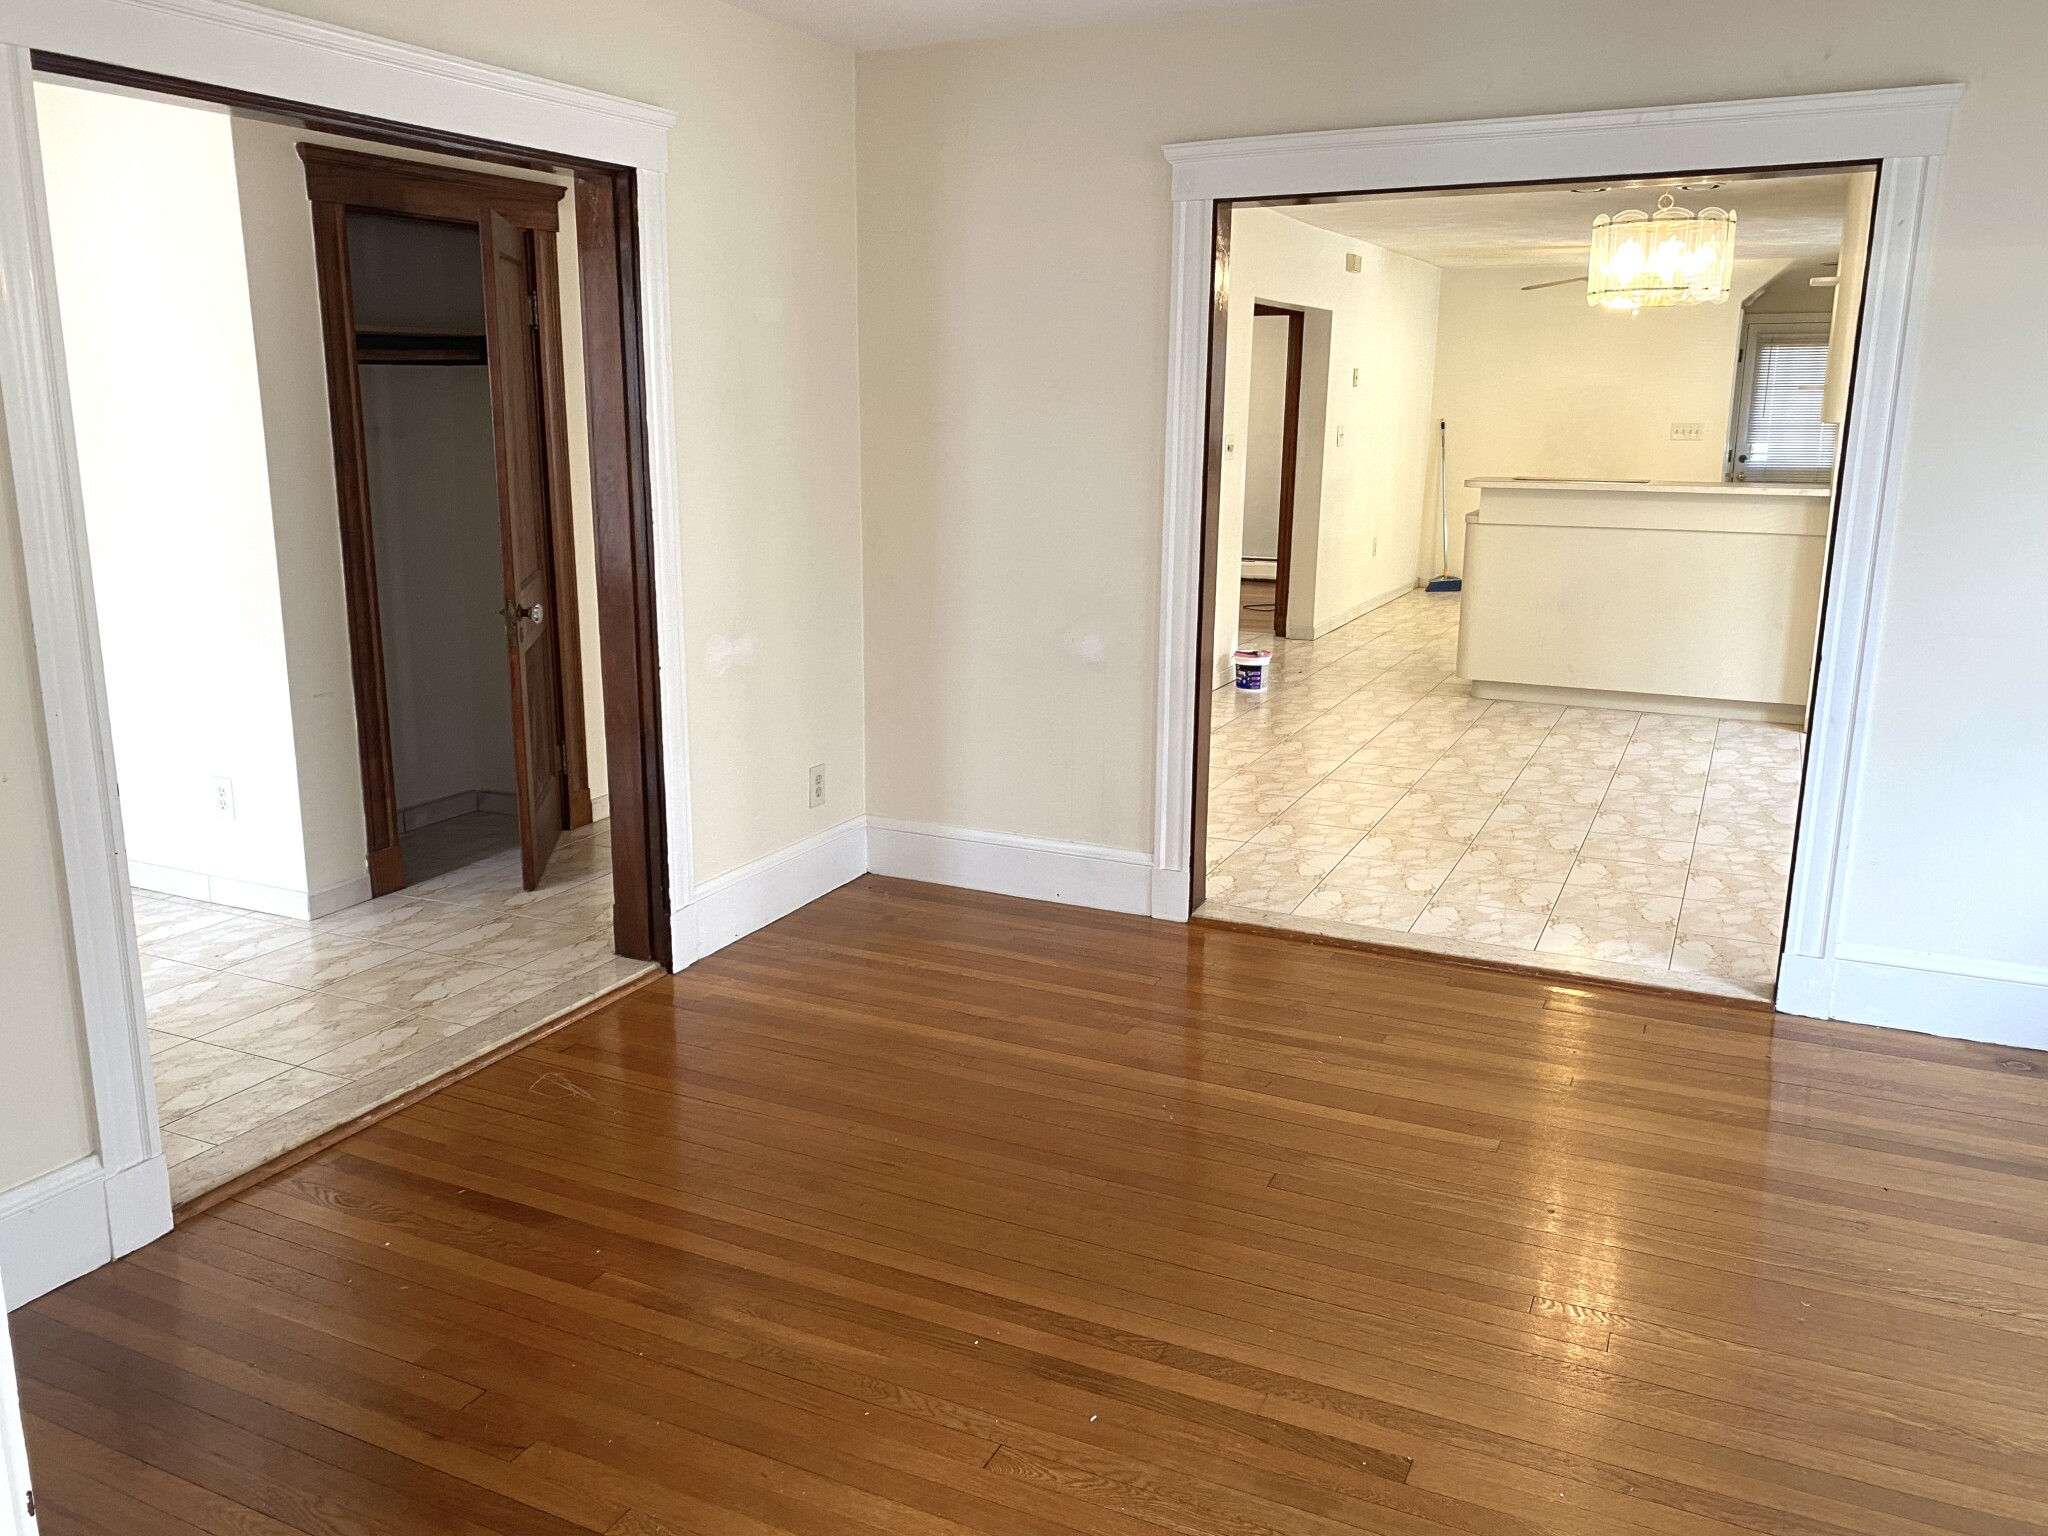 Photos of apartment on Grant,Medford MA 02155